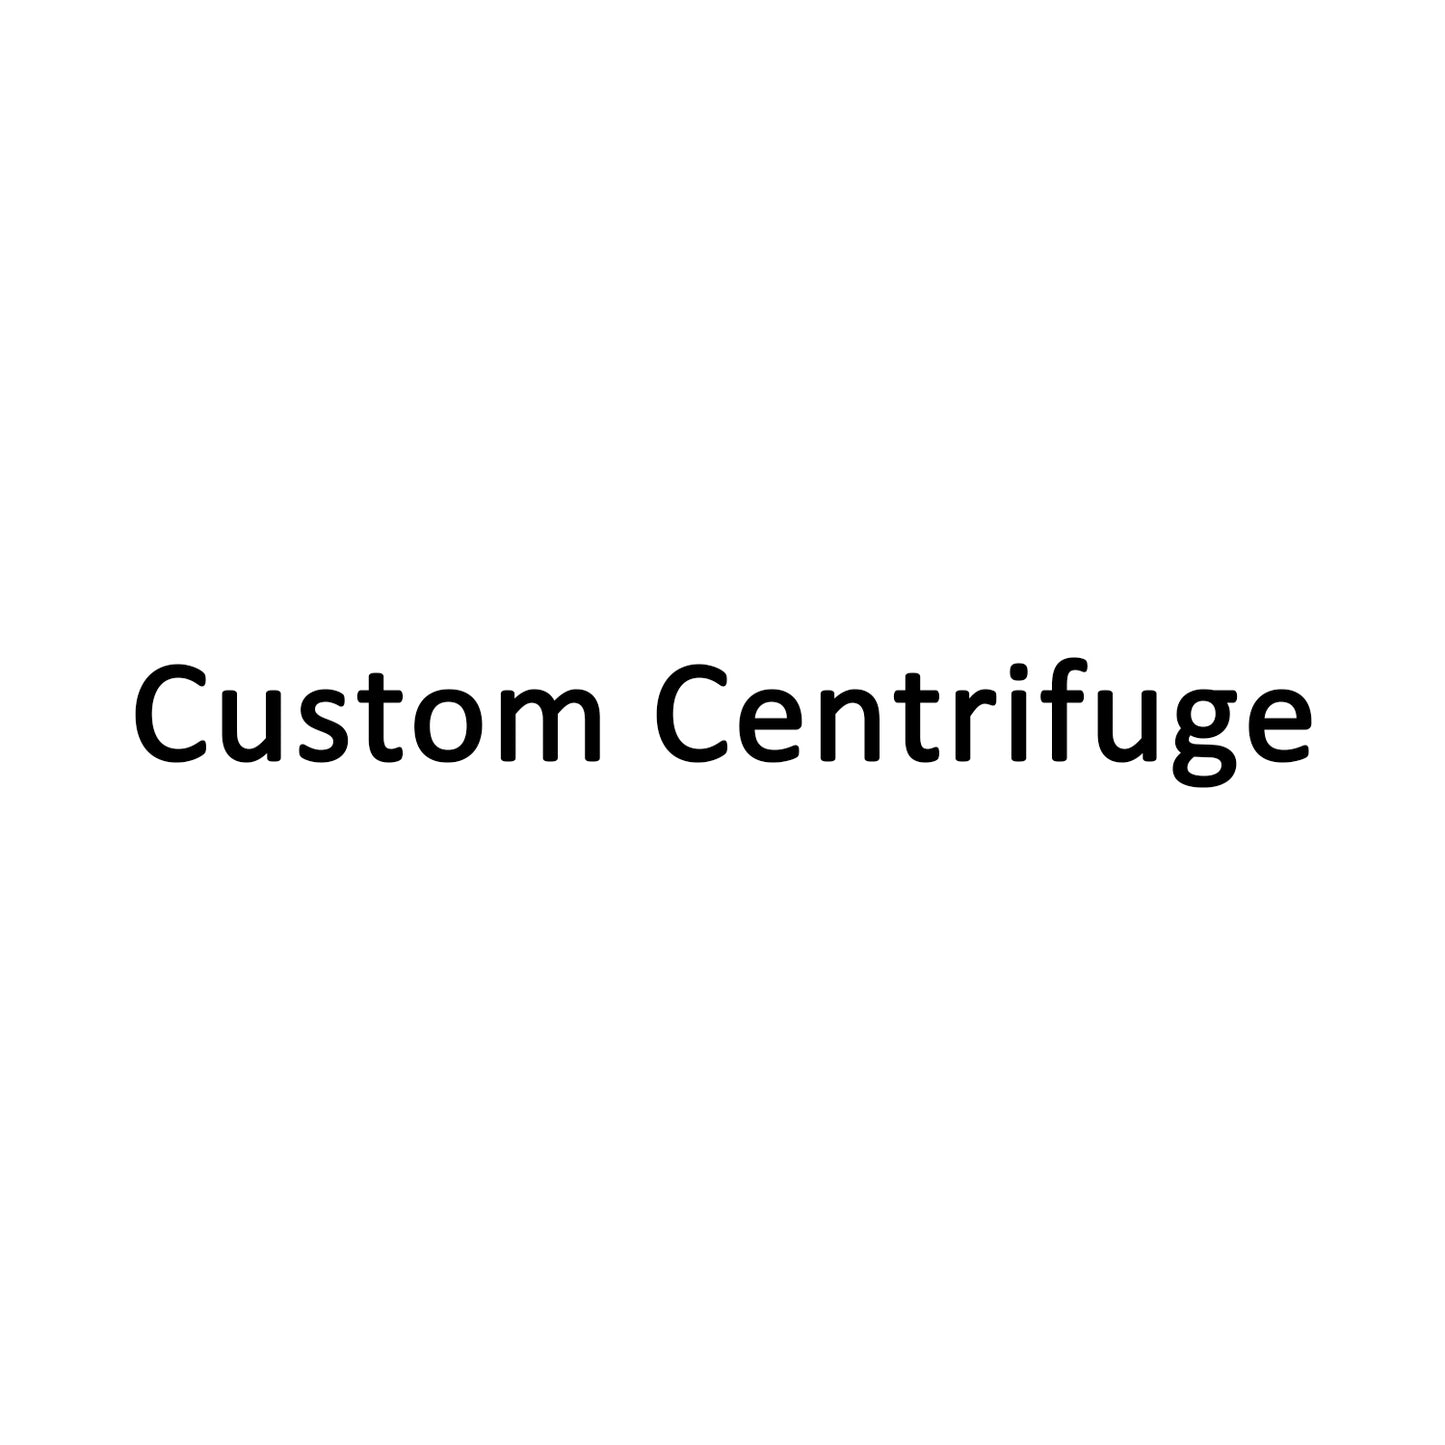 Need Custom Centrifuge?